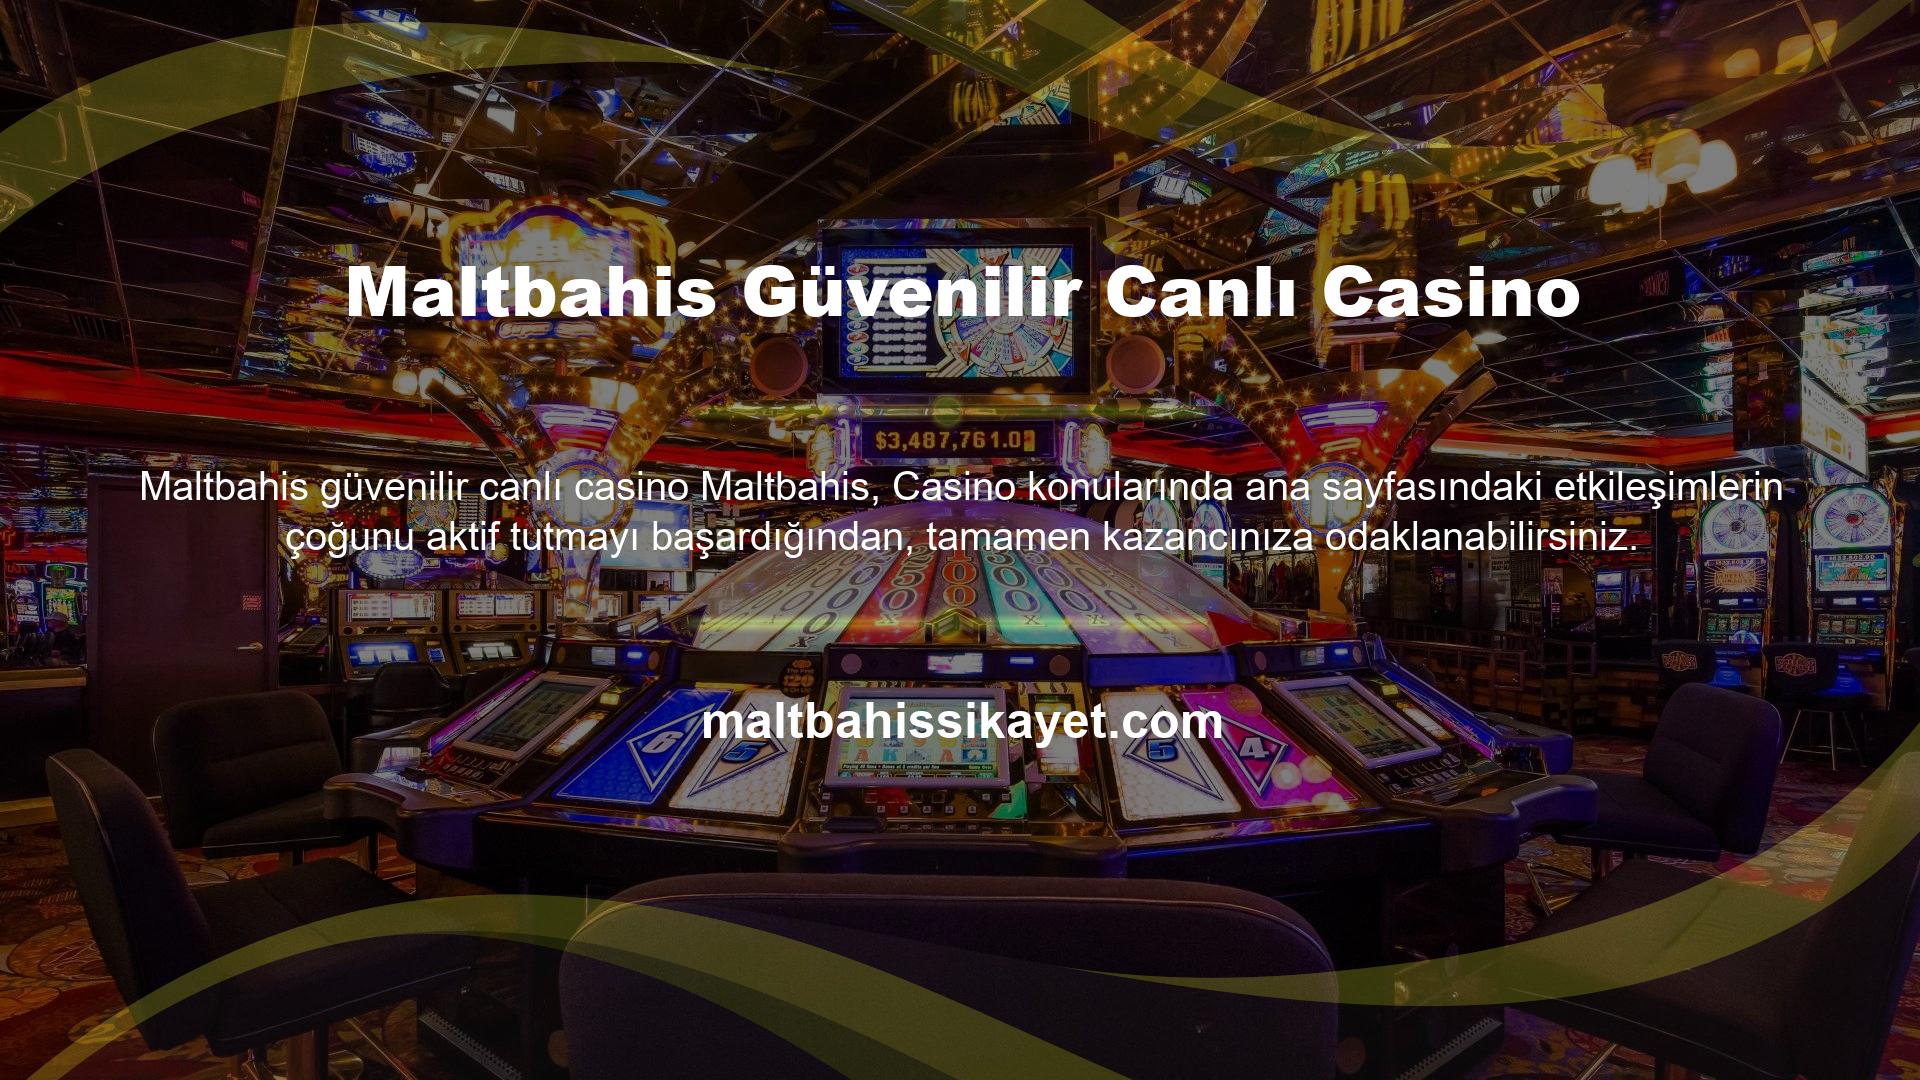 Maltbahis Güvenilir Canlı Casino